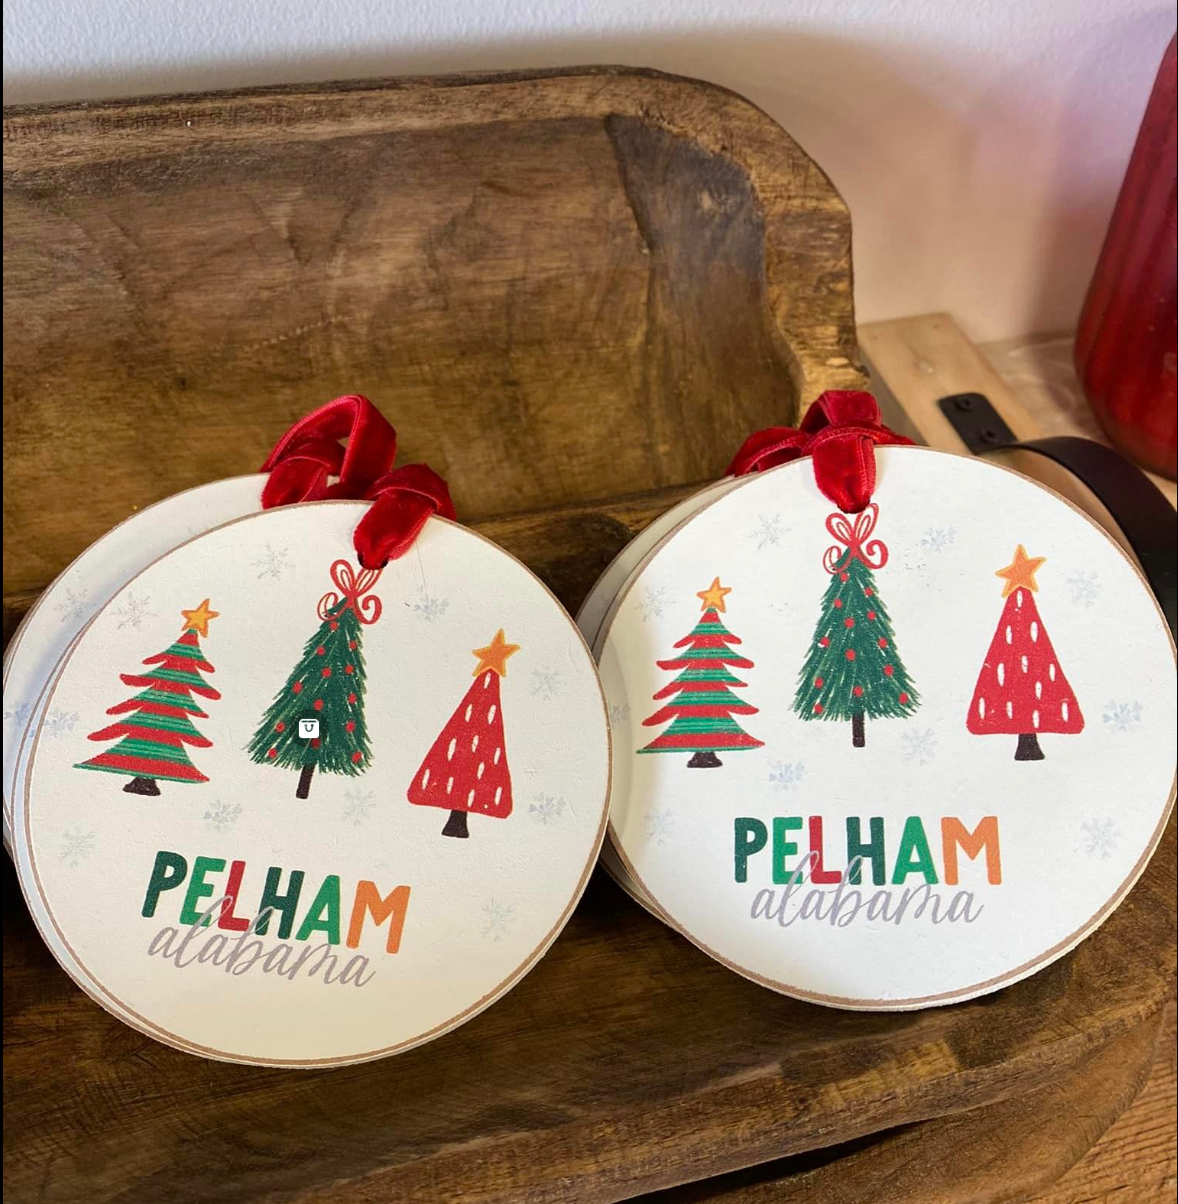 Pelham Christmas Ornaments